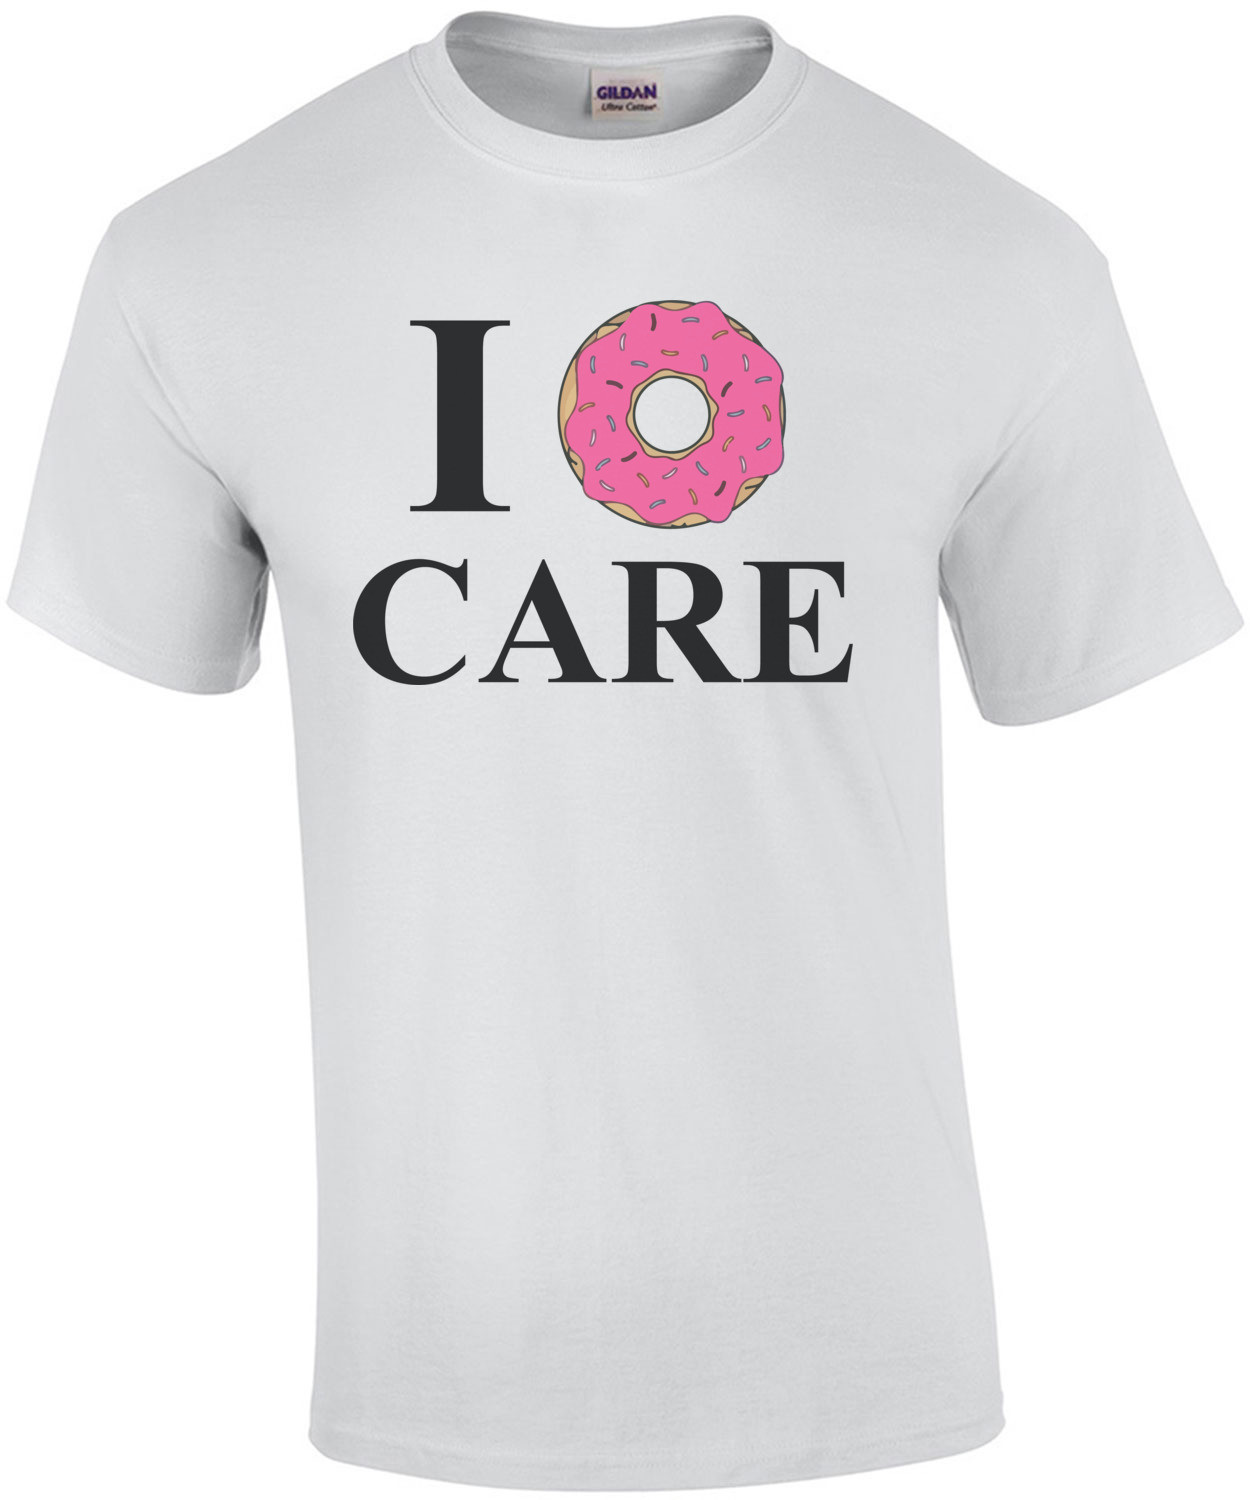 I donut care t-shirt